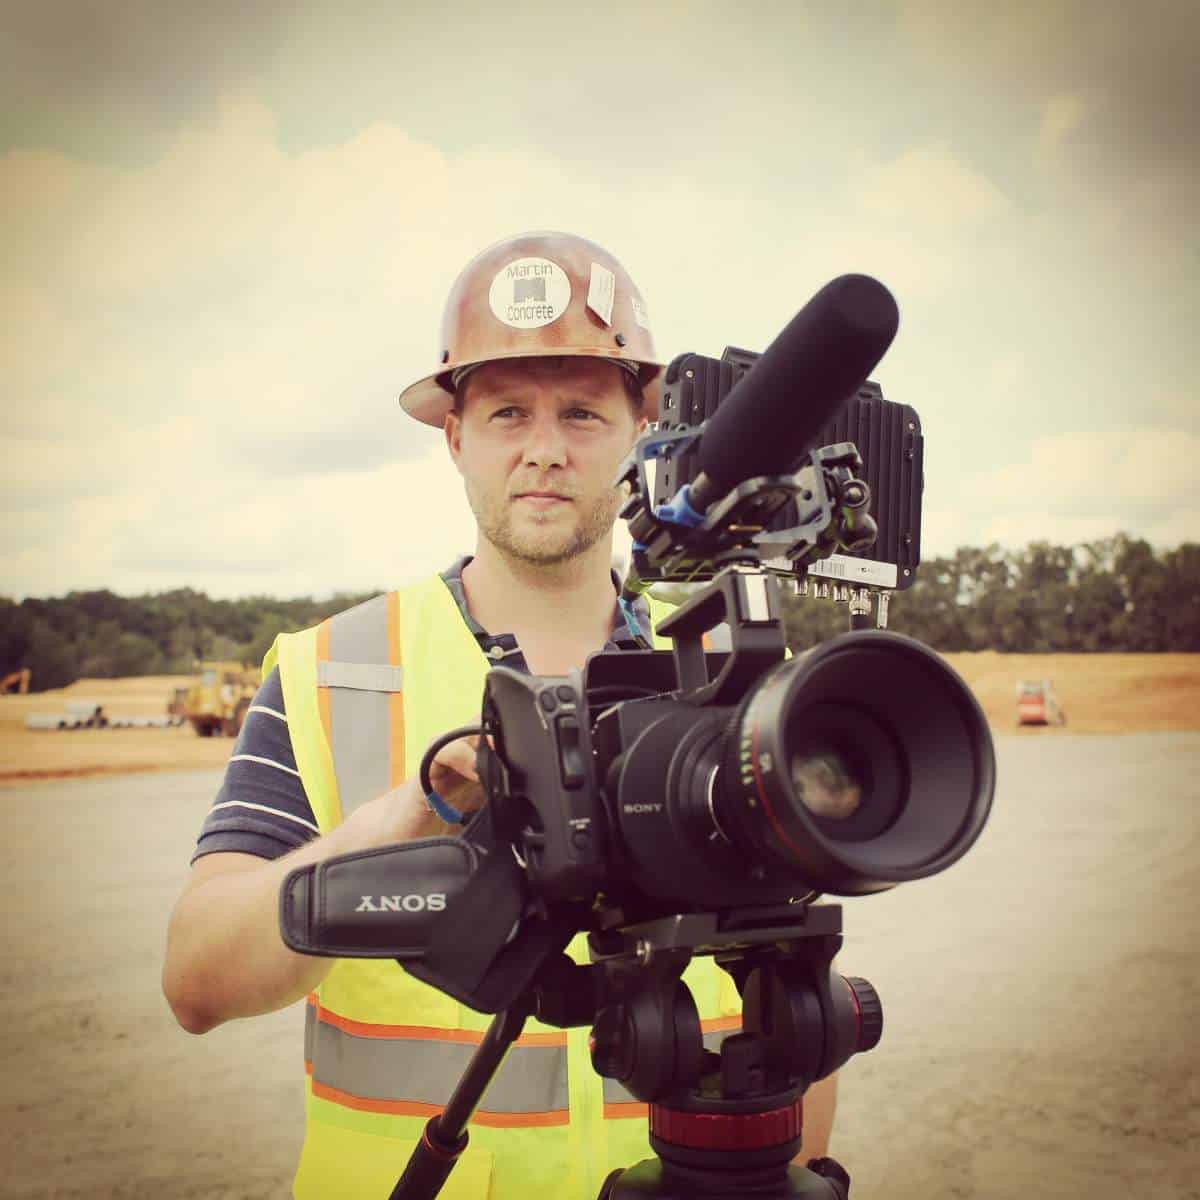 Atlanta Video Production